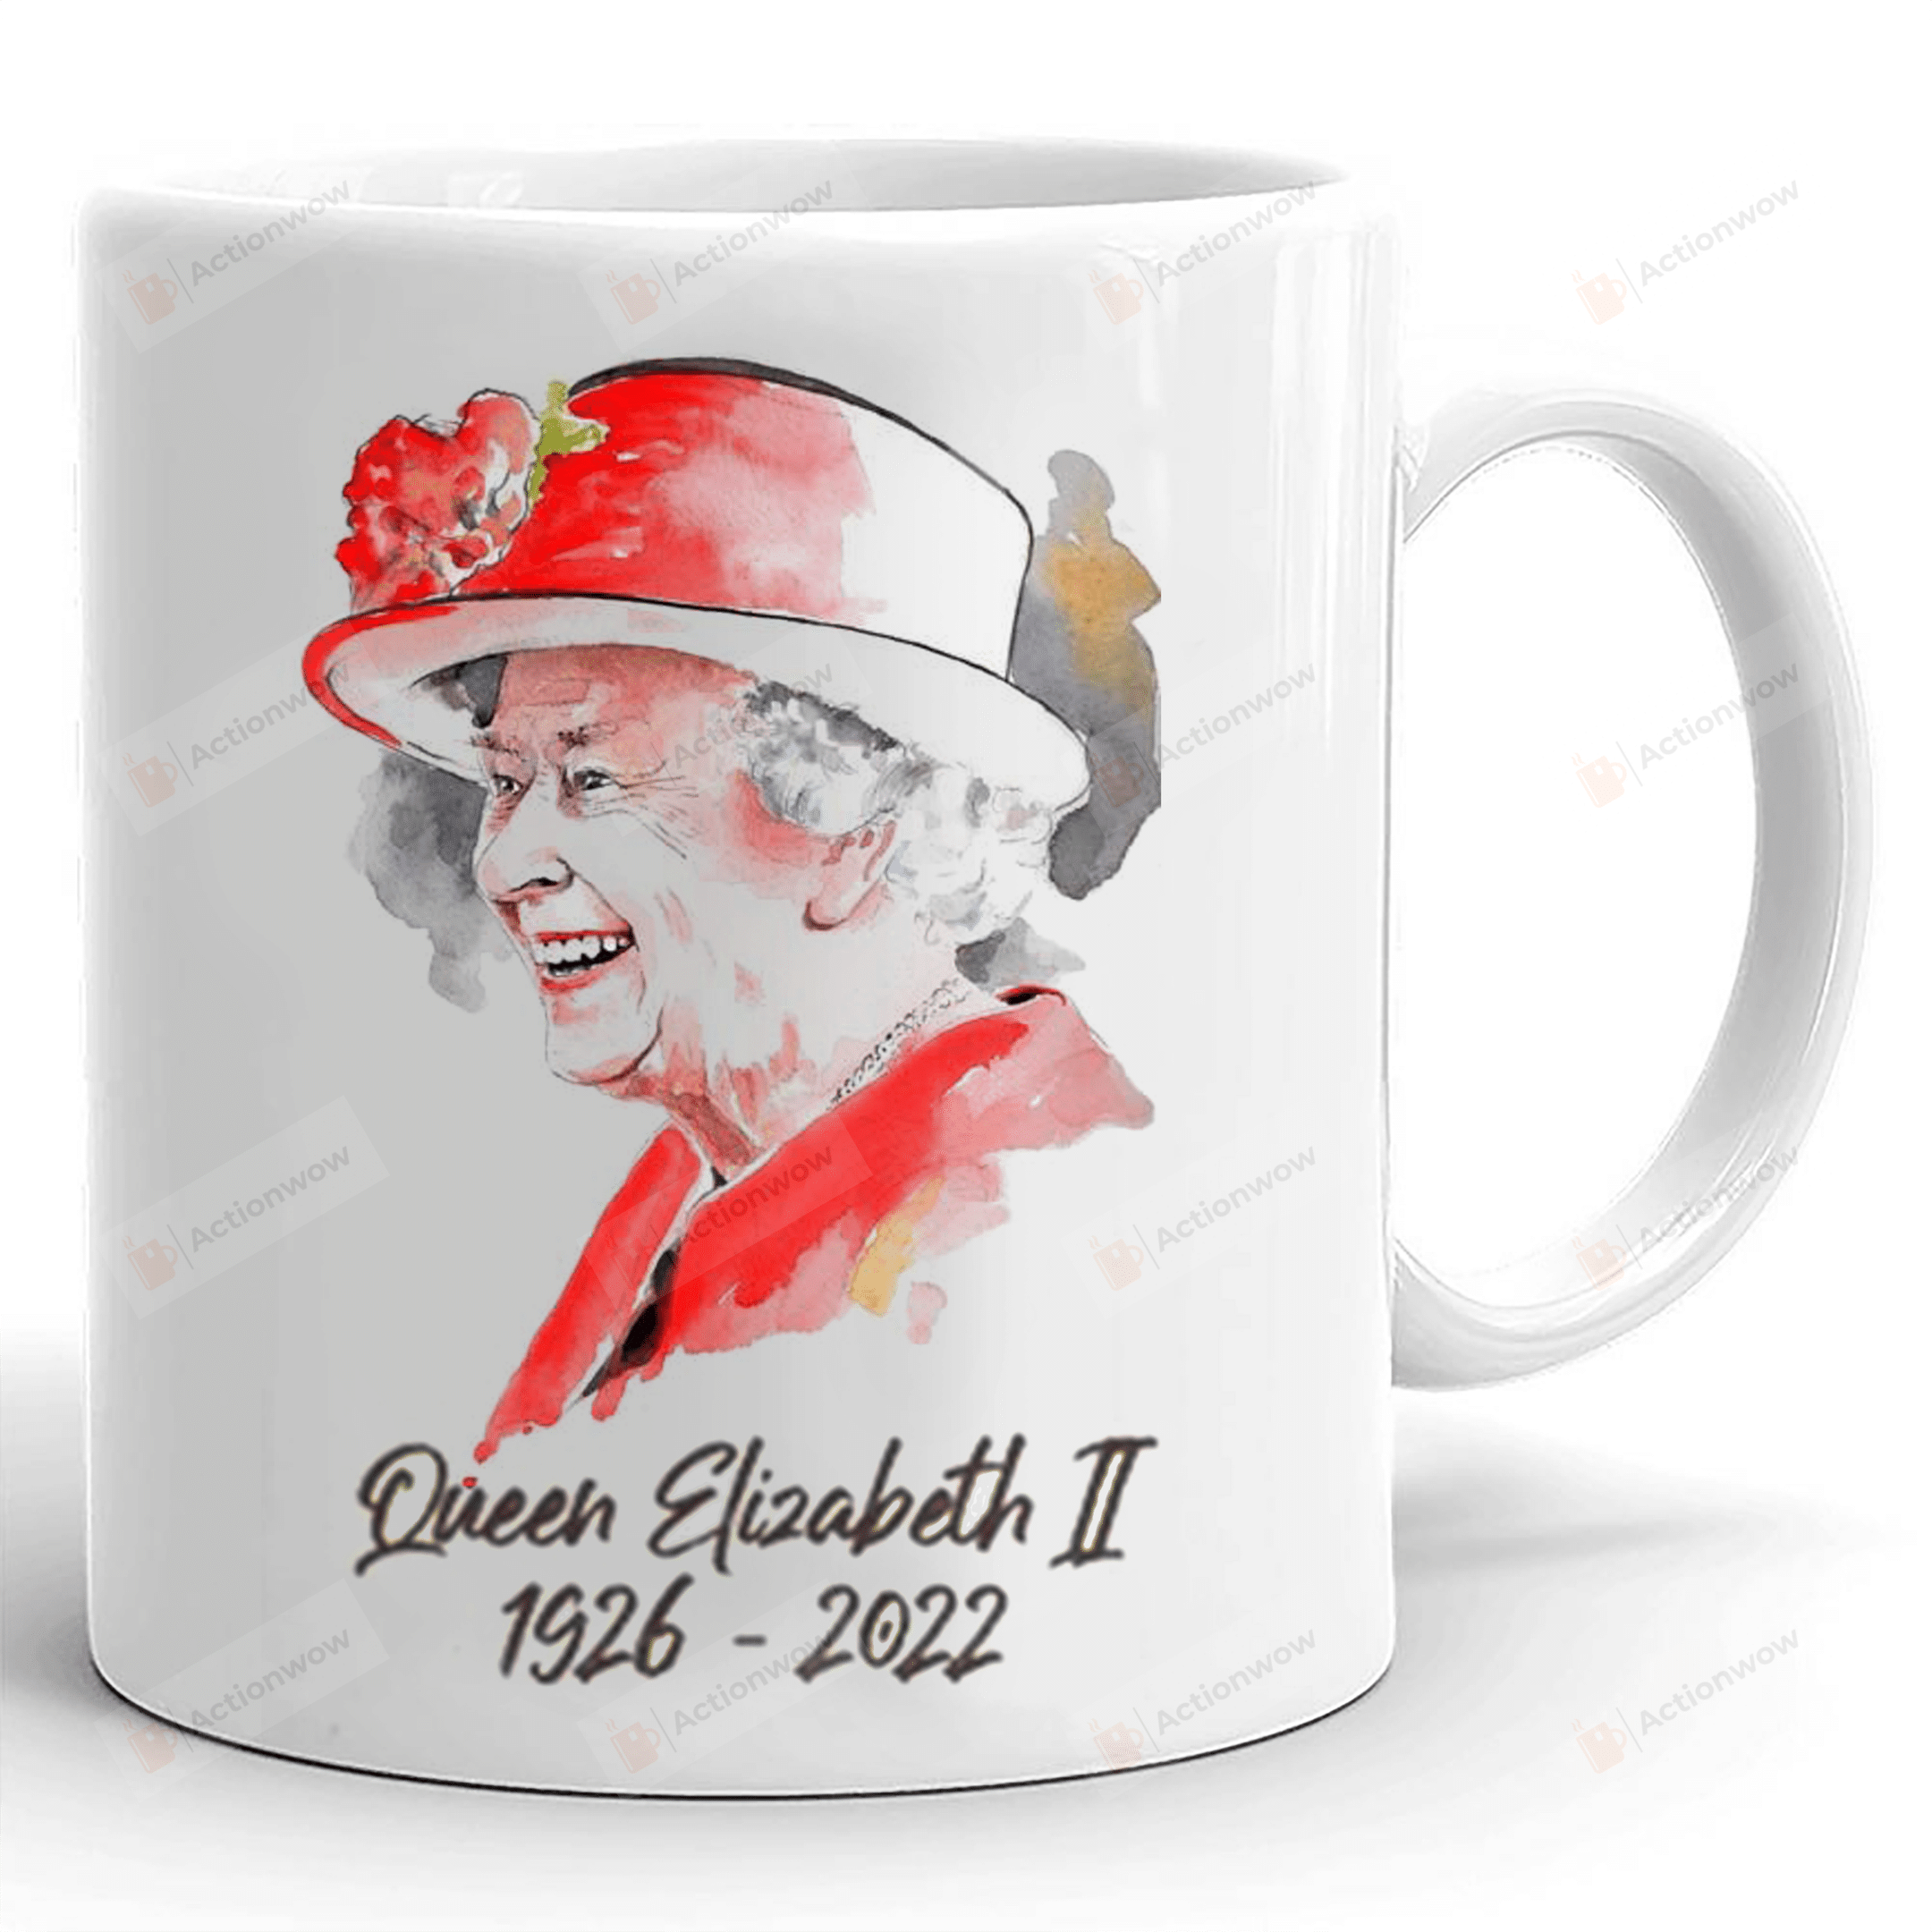 Queen Elizabeth Ii Rip 1926-2022 Mug, Rip Queen Elizabeth Ii Mug, Rest In Peace Queen Elizabeth Mug, Queen Elizabeth Ii Coffee Mug Tea Cup